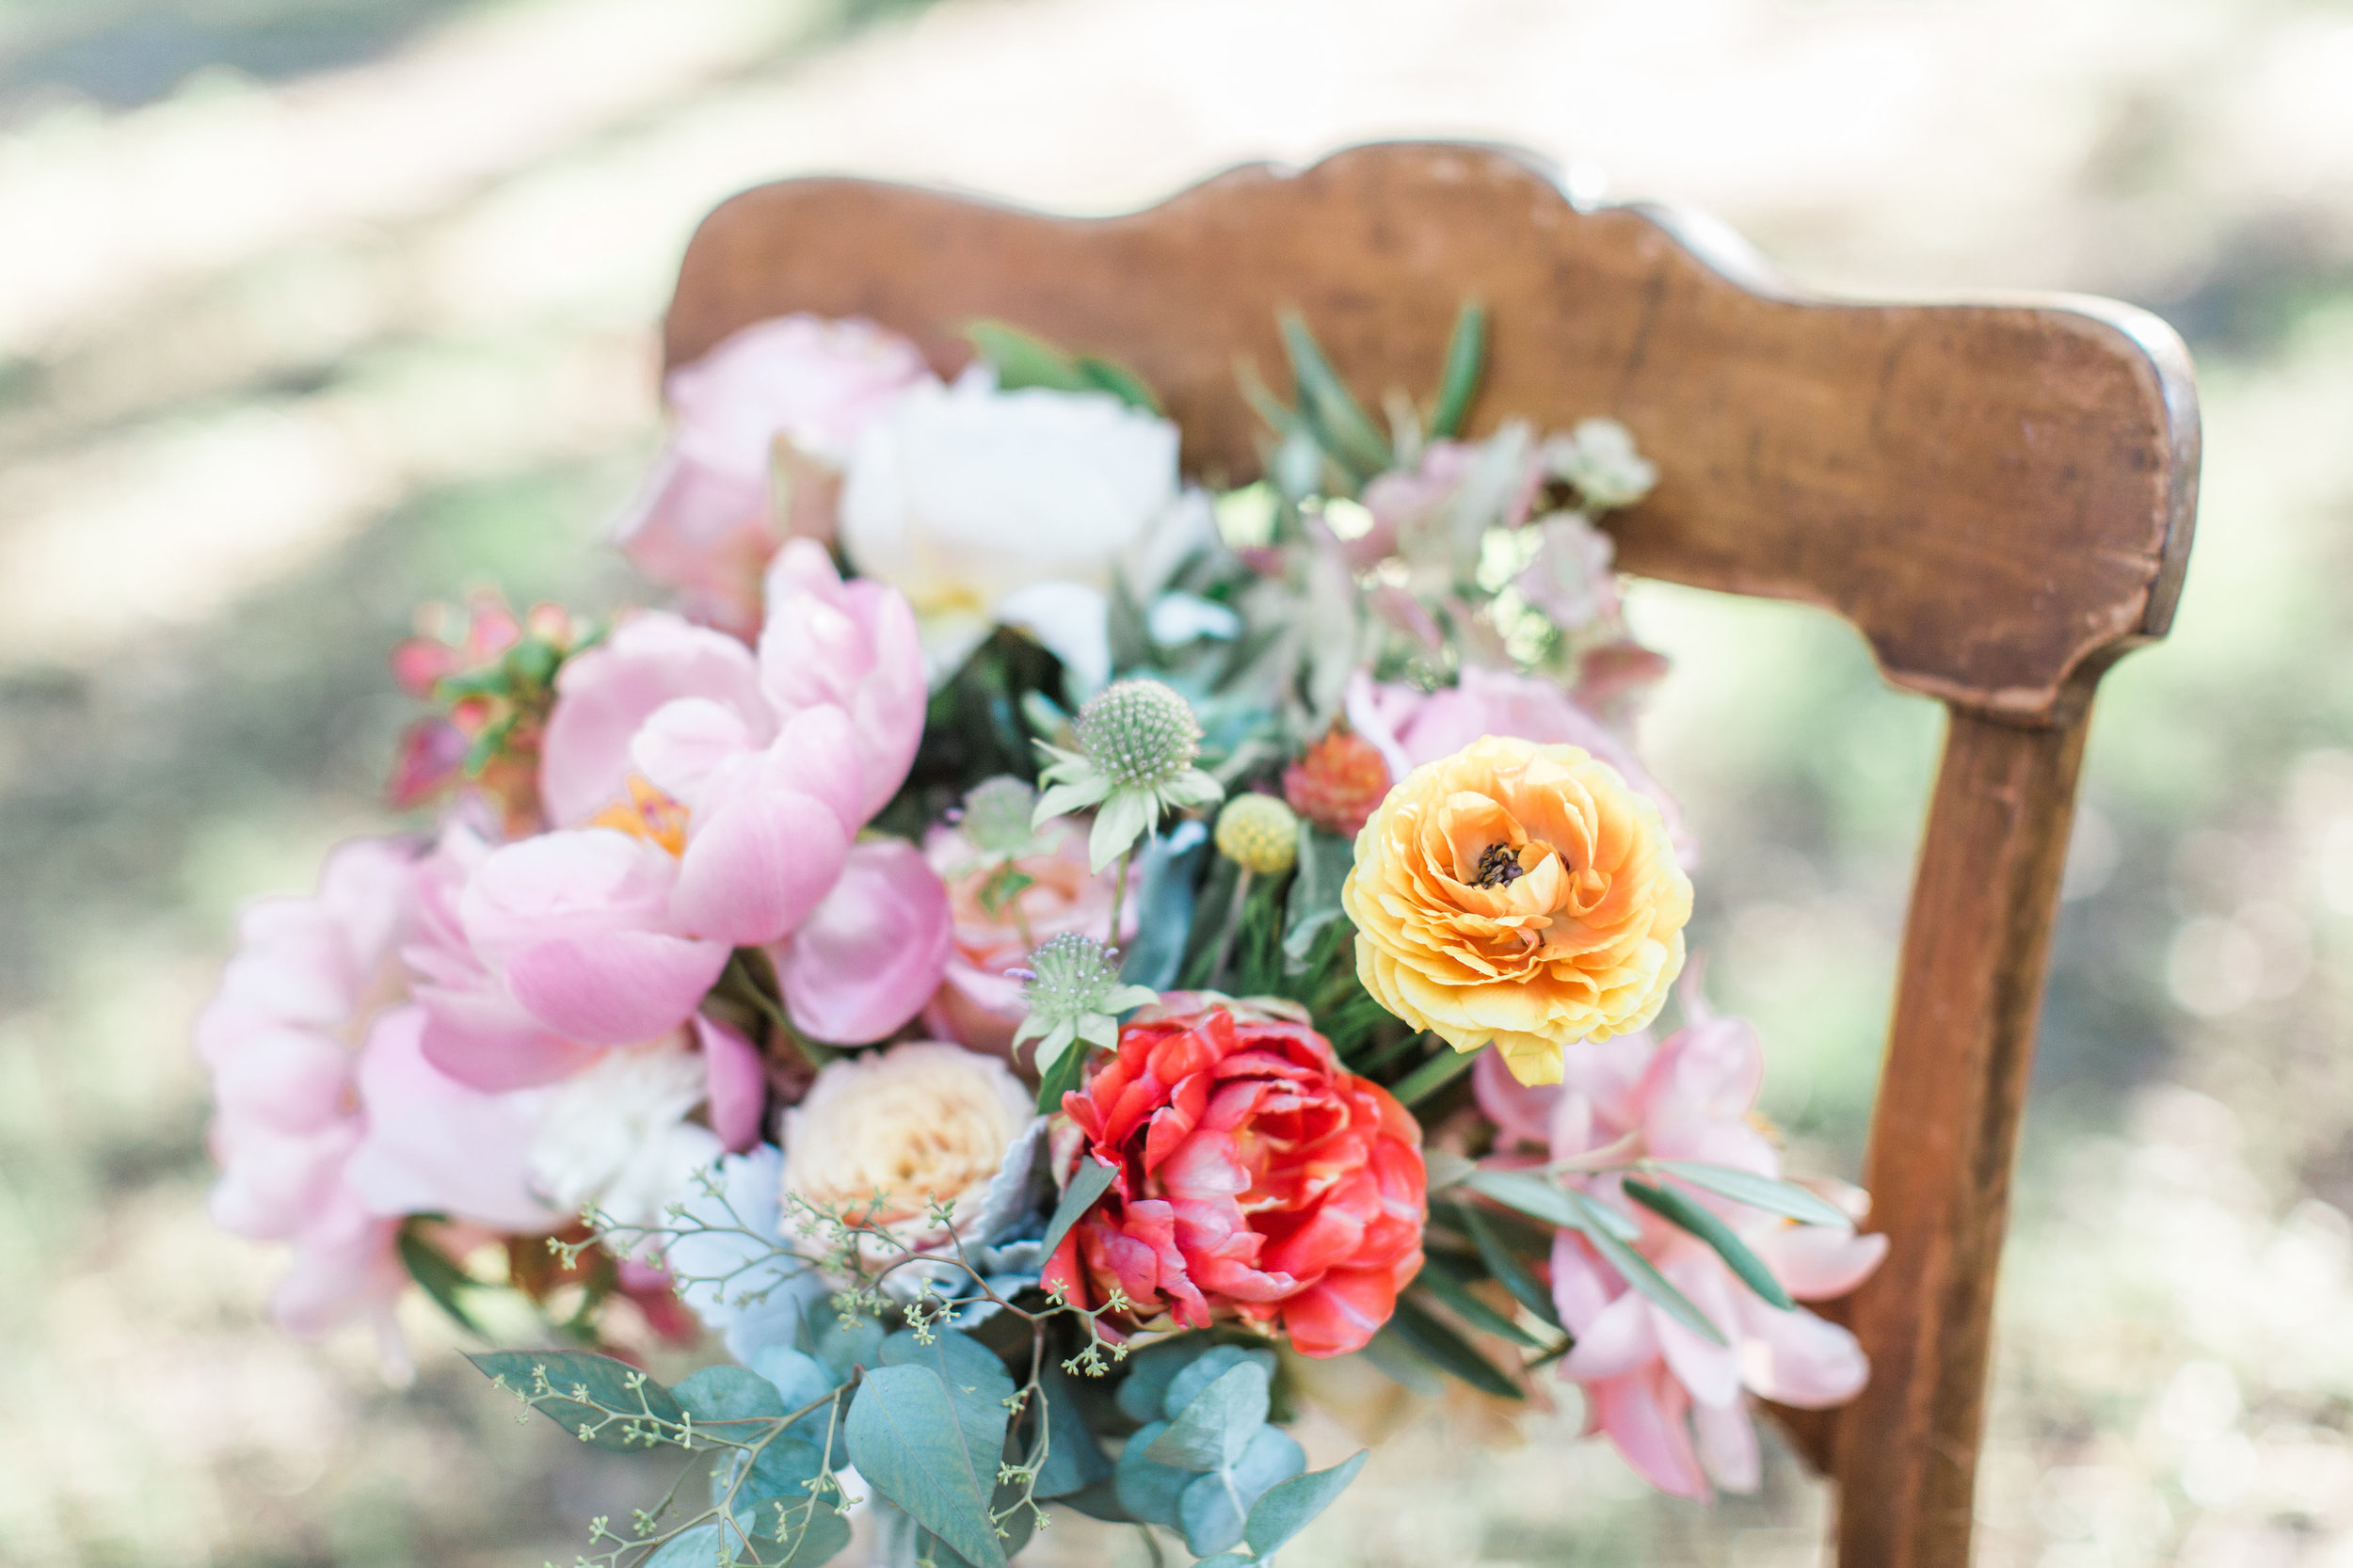 Savannah Wedding Inspiration with pastel flowers including peonies